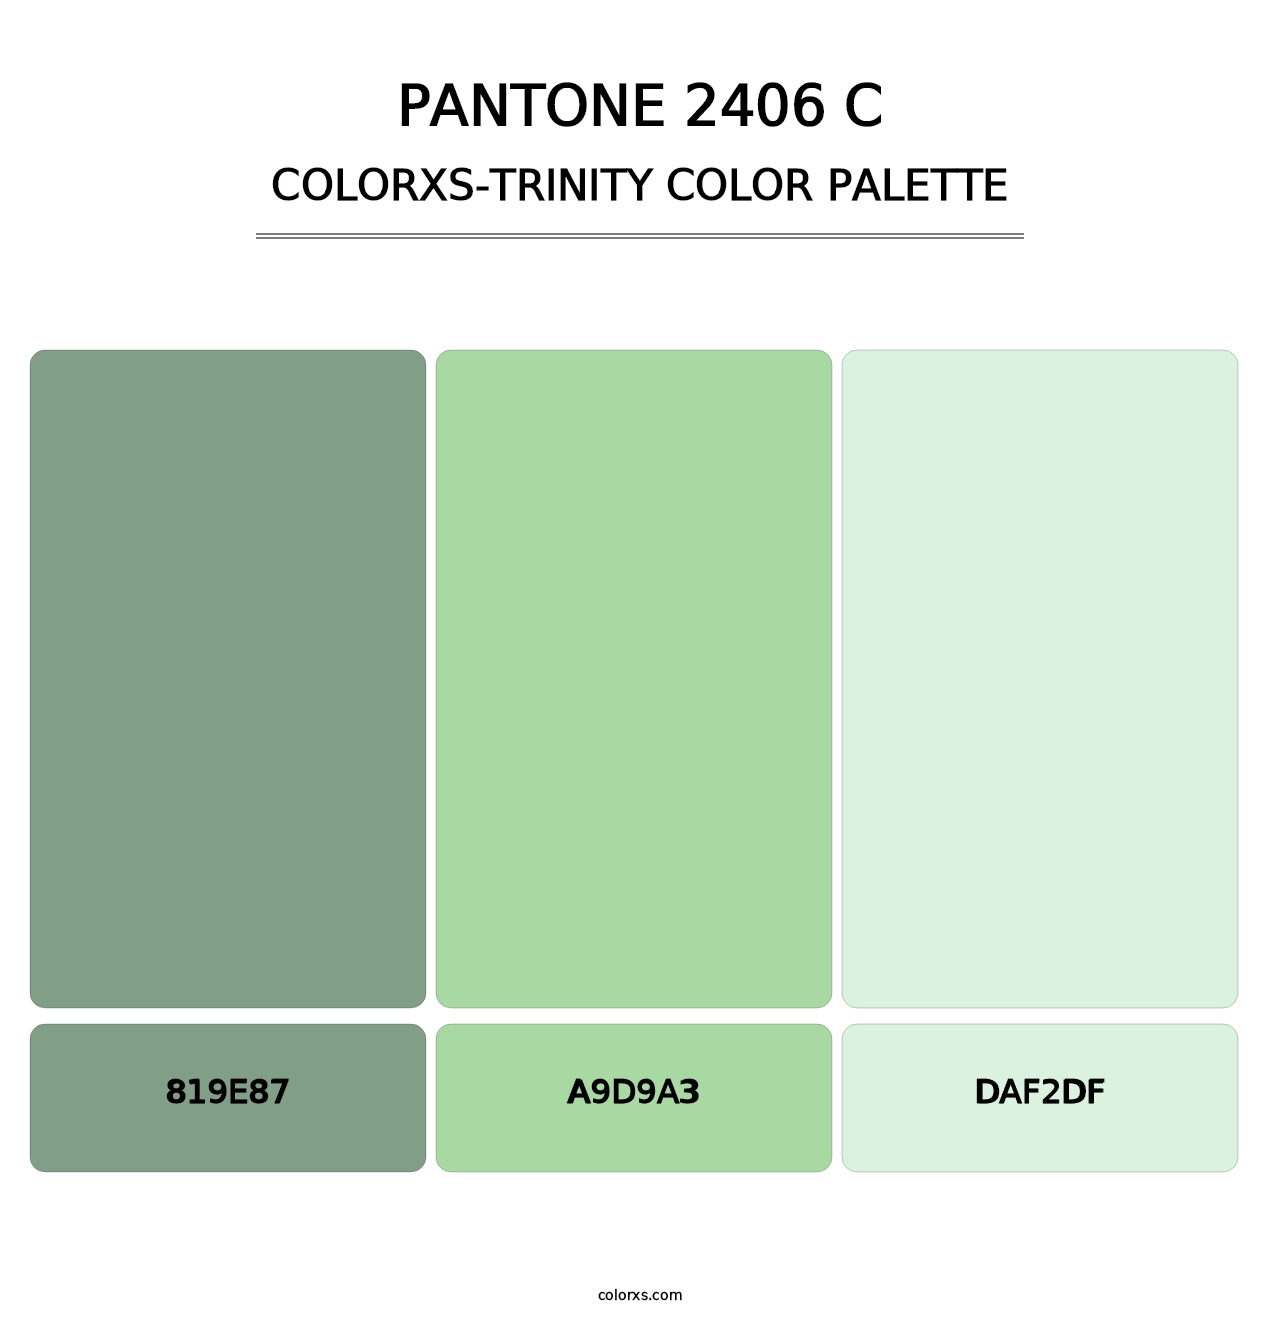 PANTONE 2406 C - Colorxs Trinity Palette